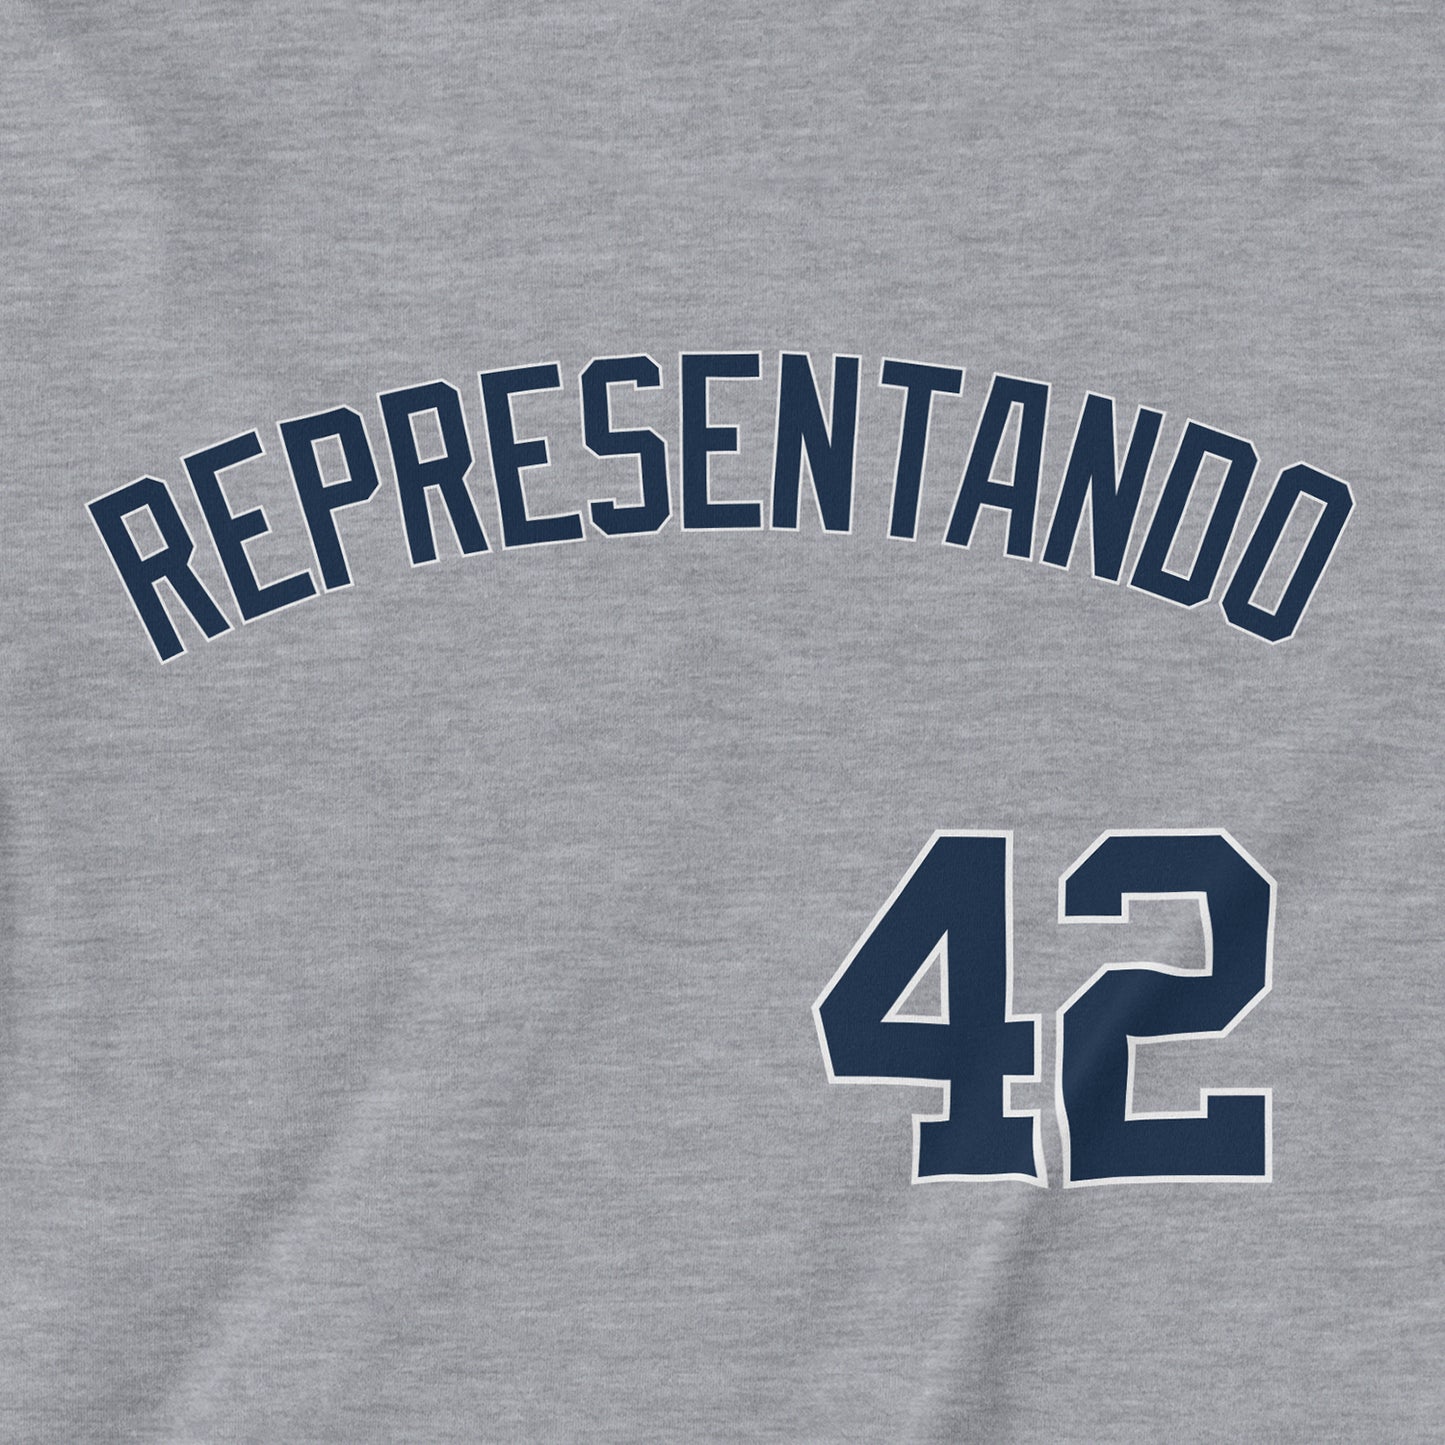 Representando 42 | Panama | T-Shirt